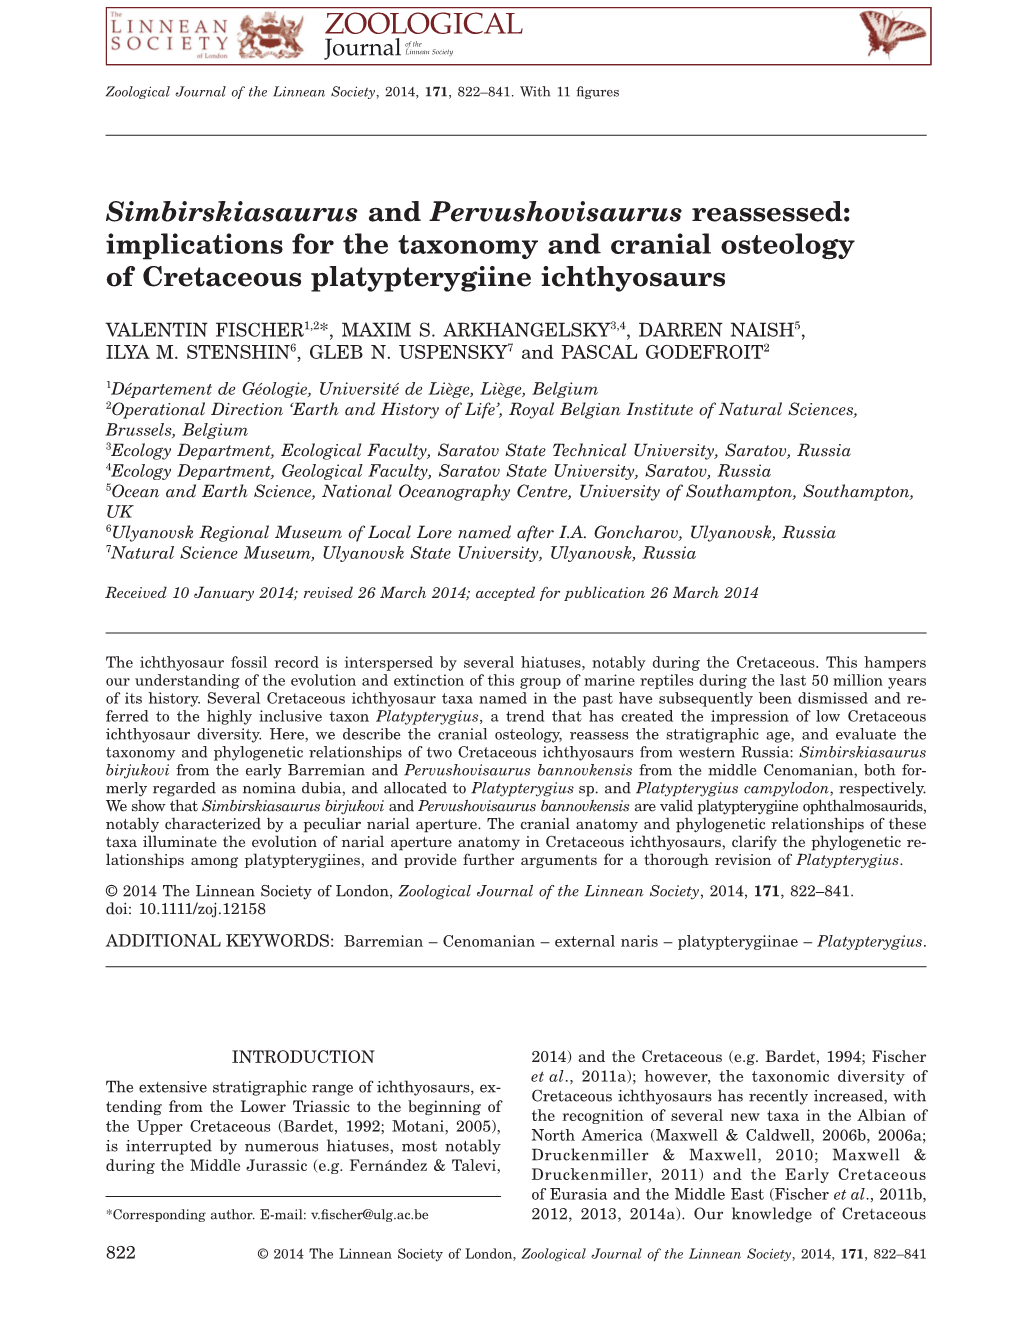 Simbirskiasaurus and Pervushovisaurus Reassessed: Implications for the Taxonomy and Cranial Osteology of Cretaceous Platypterygiine Ichthyosaurs